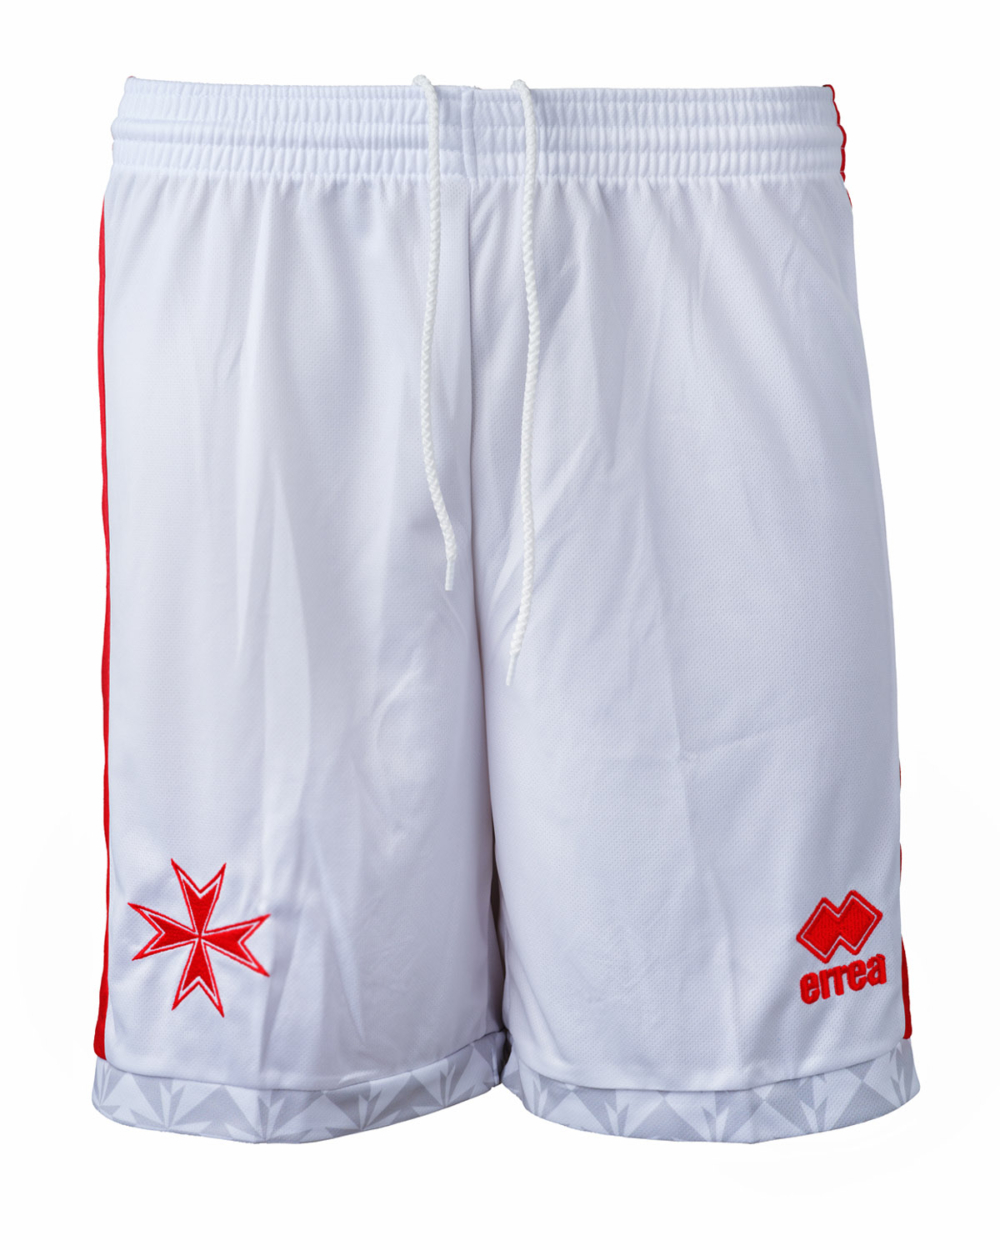 Malta Match Shorts